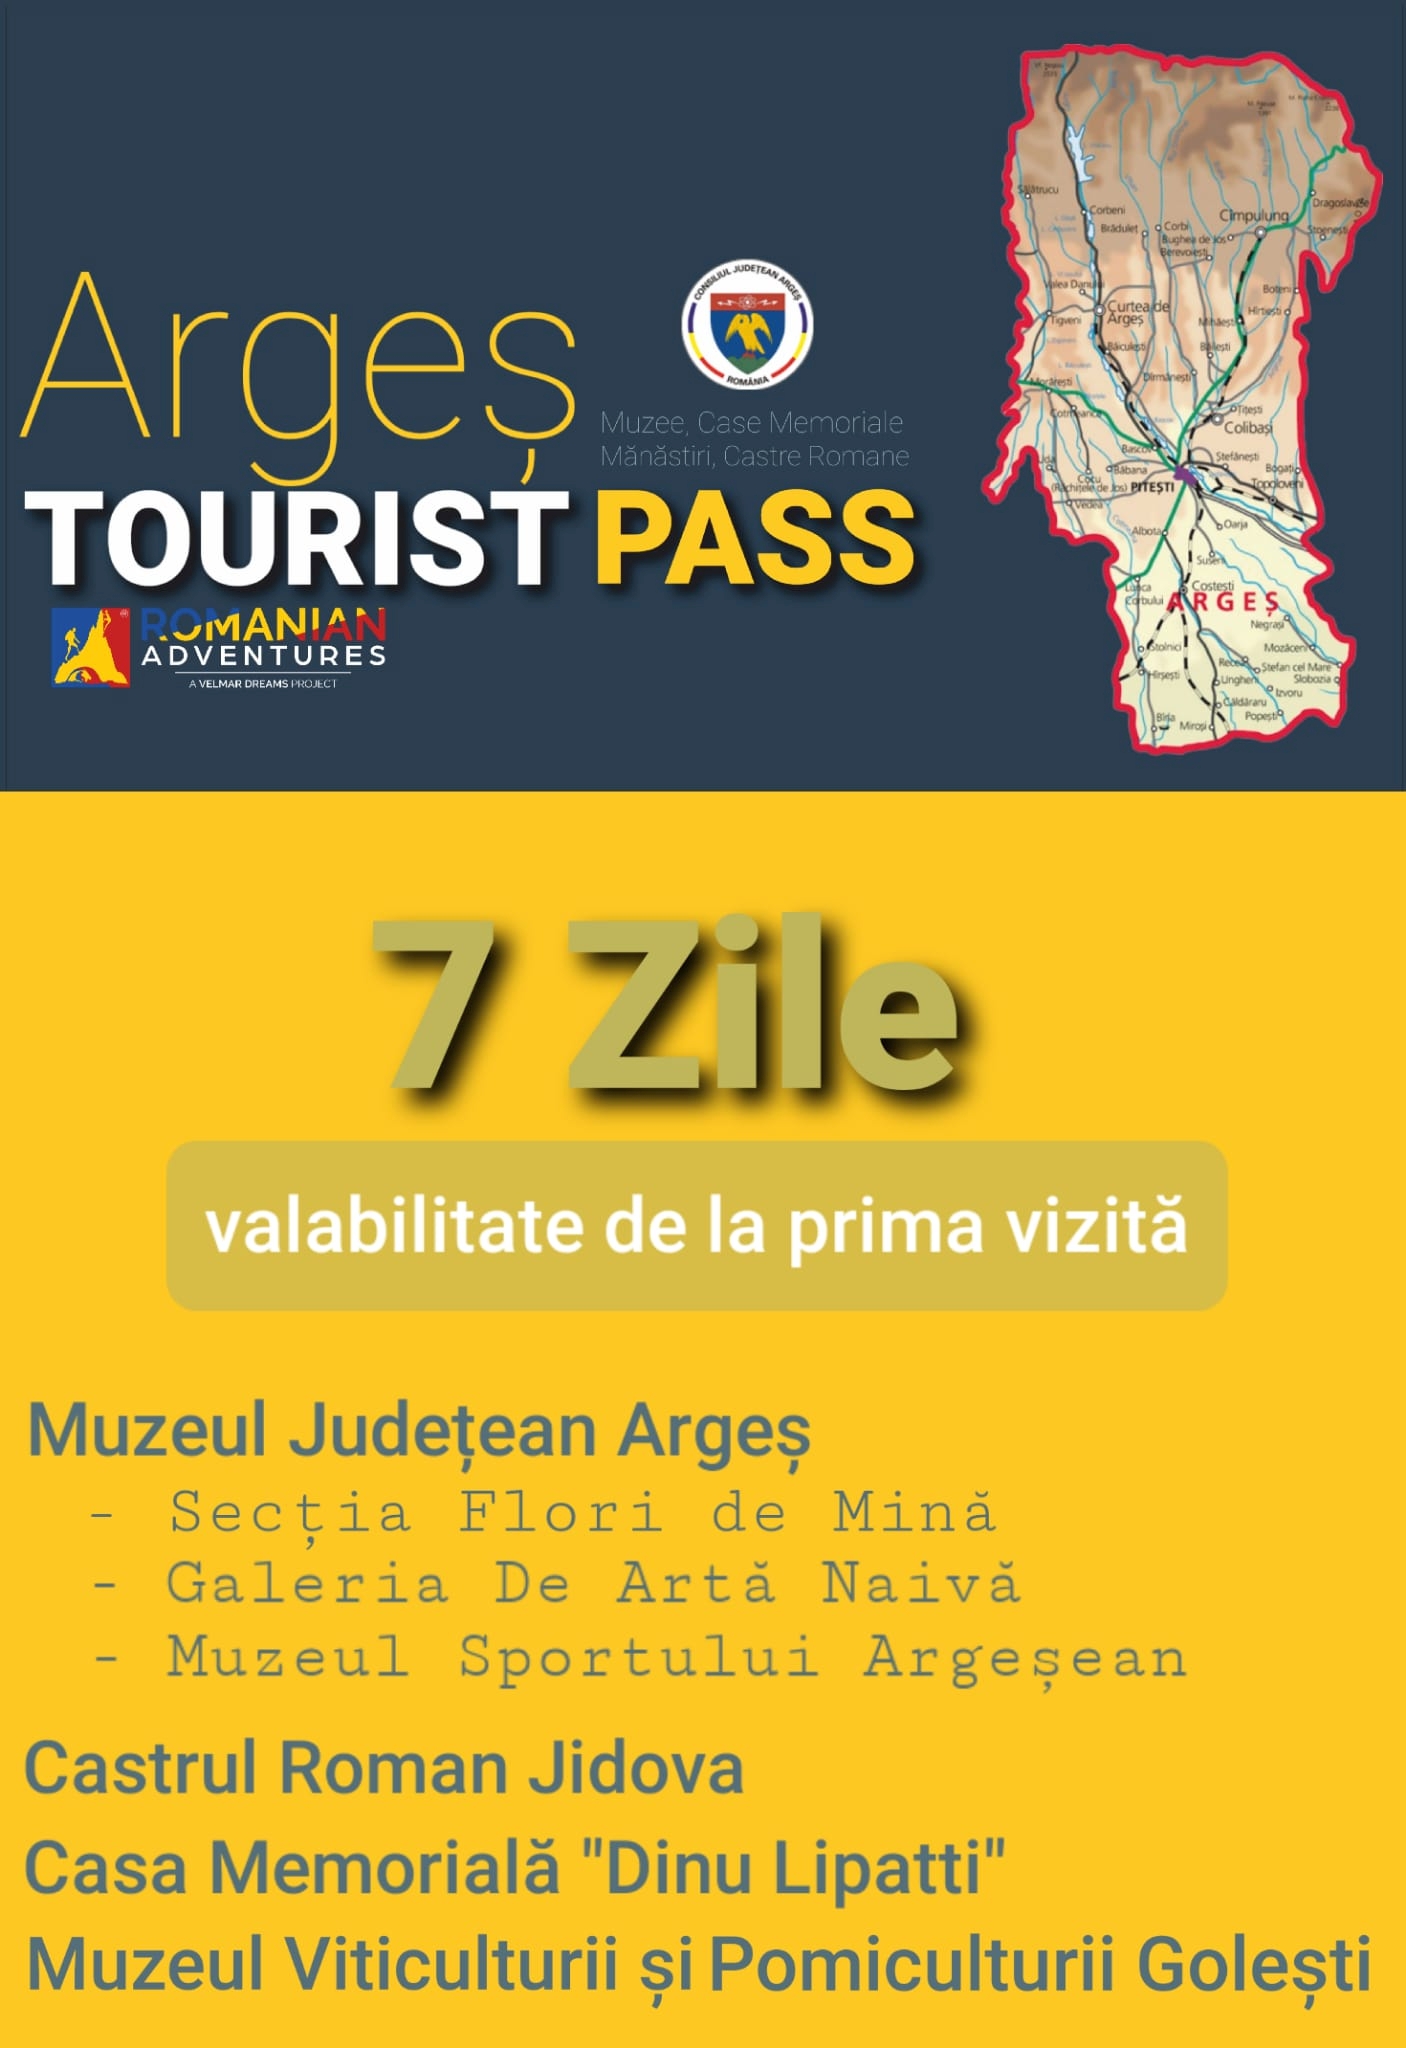 ARGES tourist pass.jpg